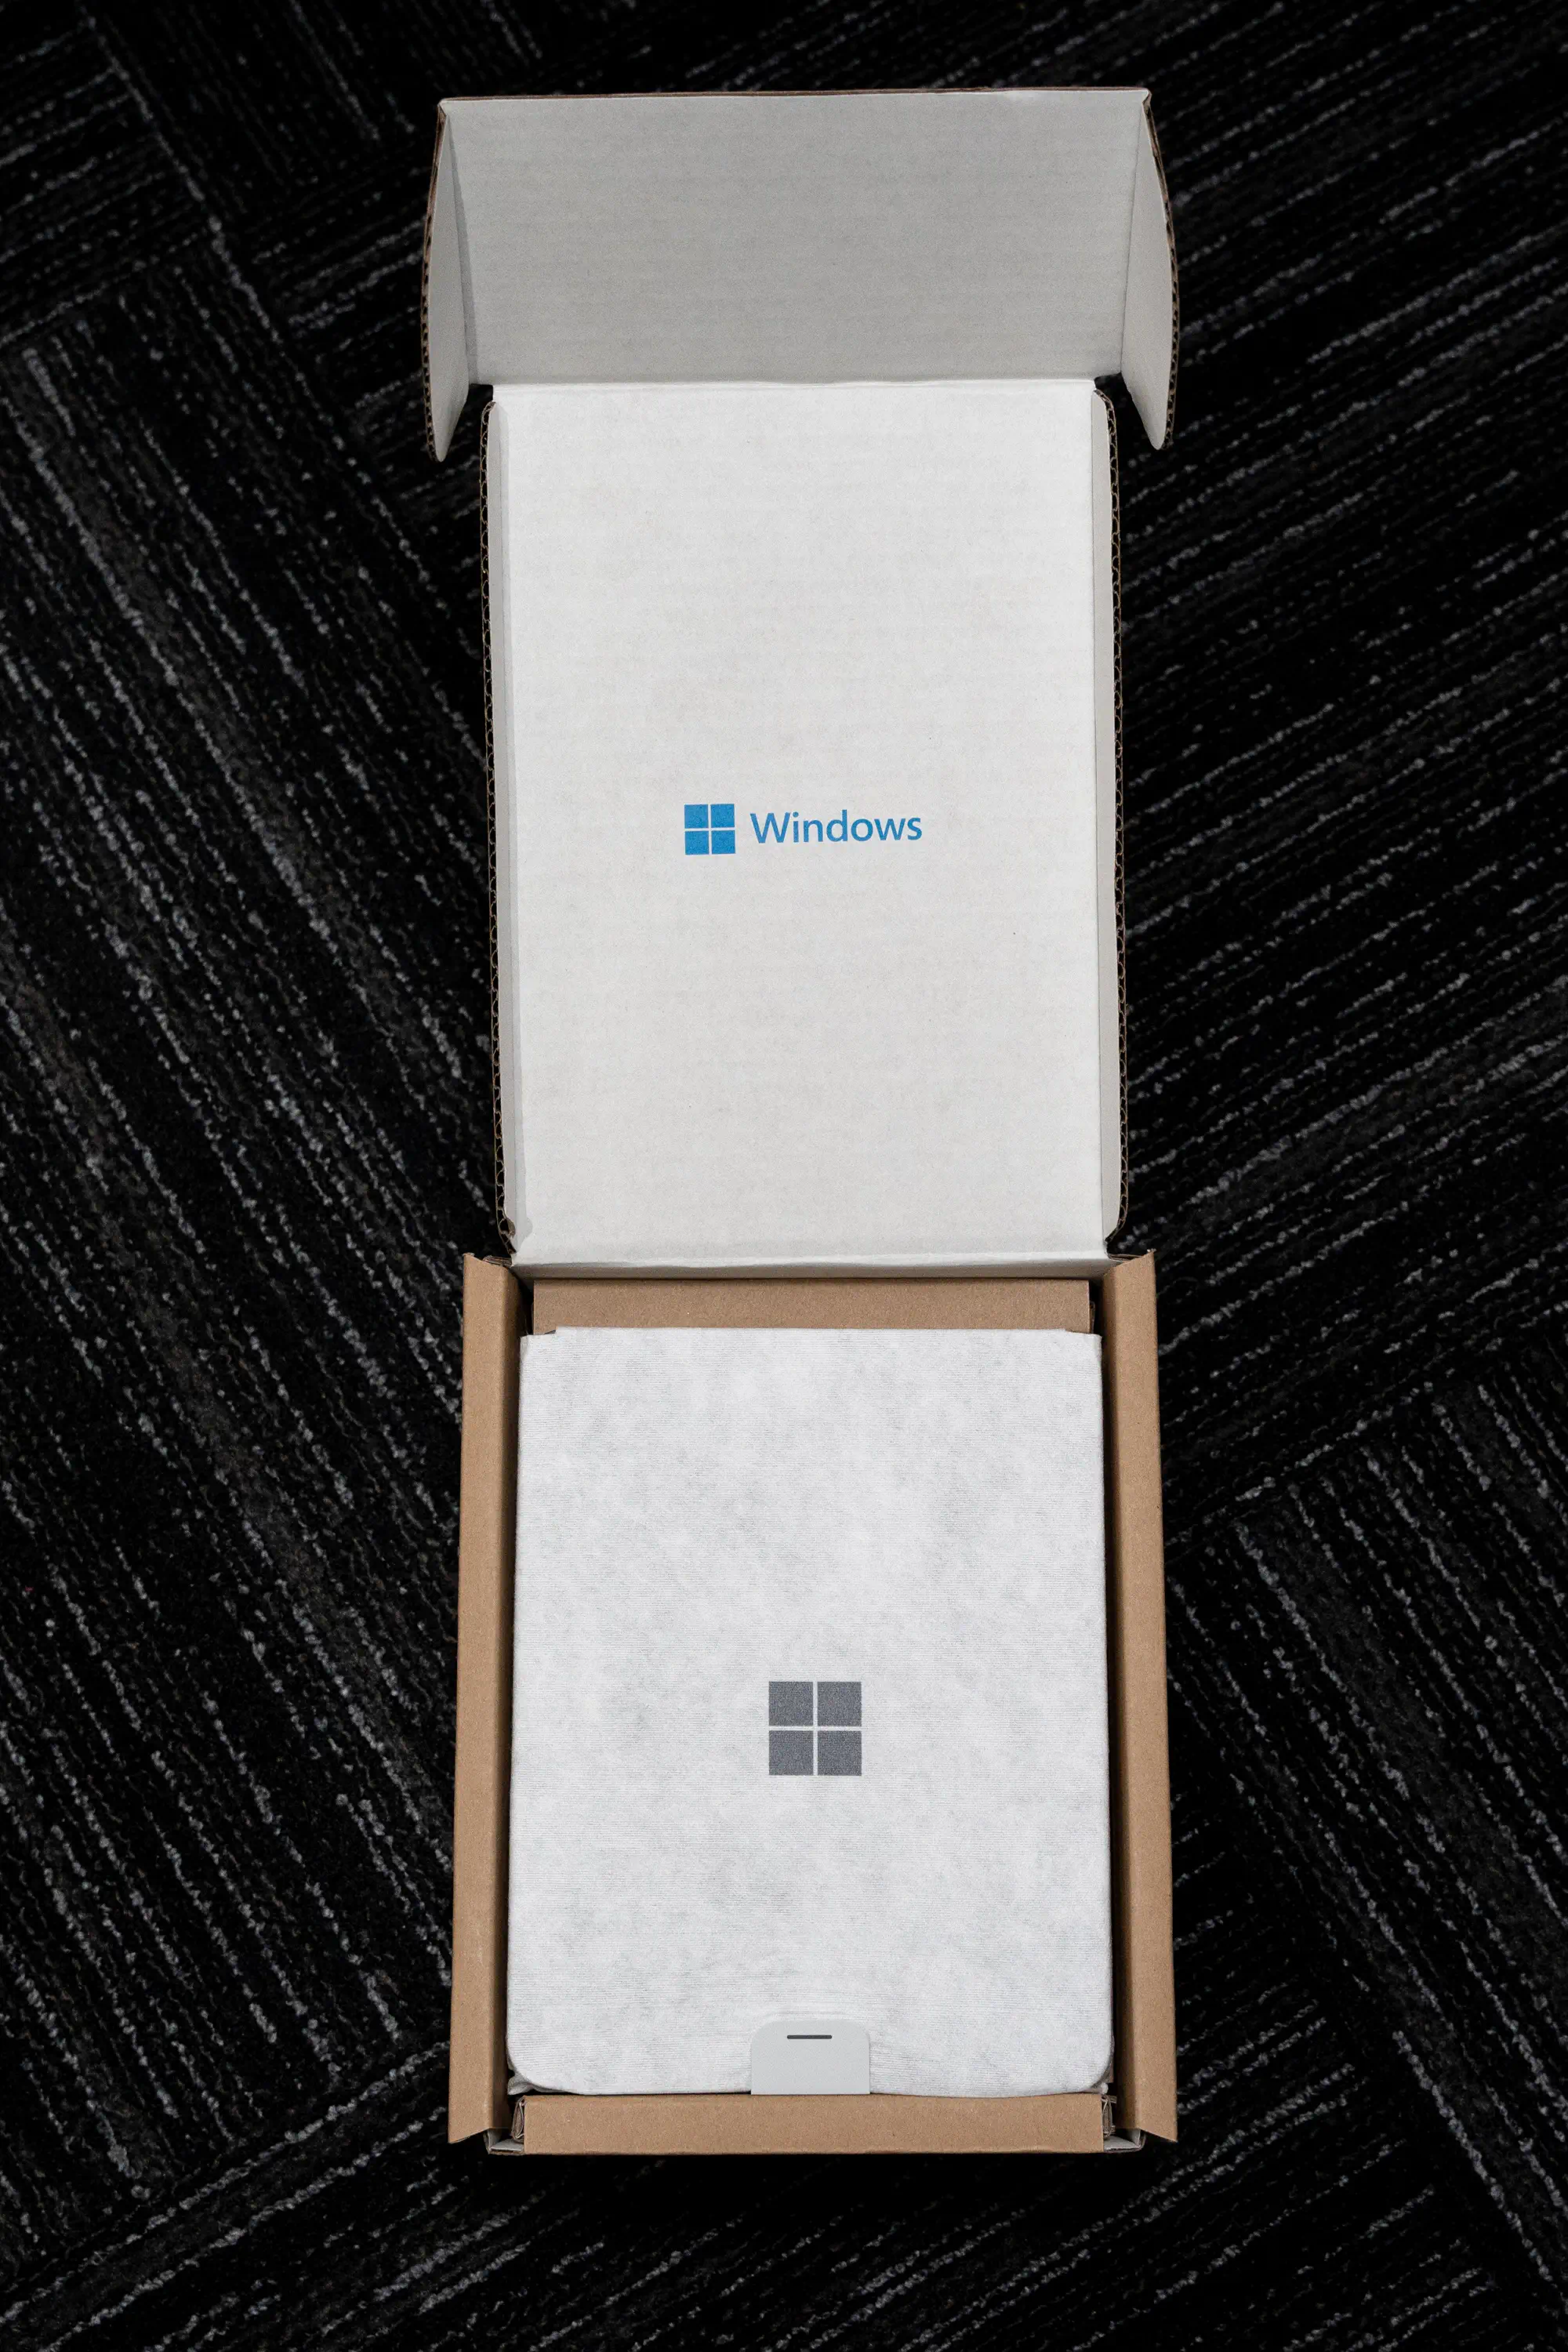 Dev Kitを開封したところ。Microsoftロゴの入った不織布に覆われた本体が見える。